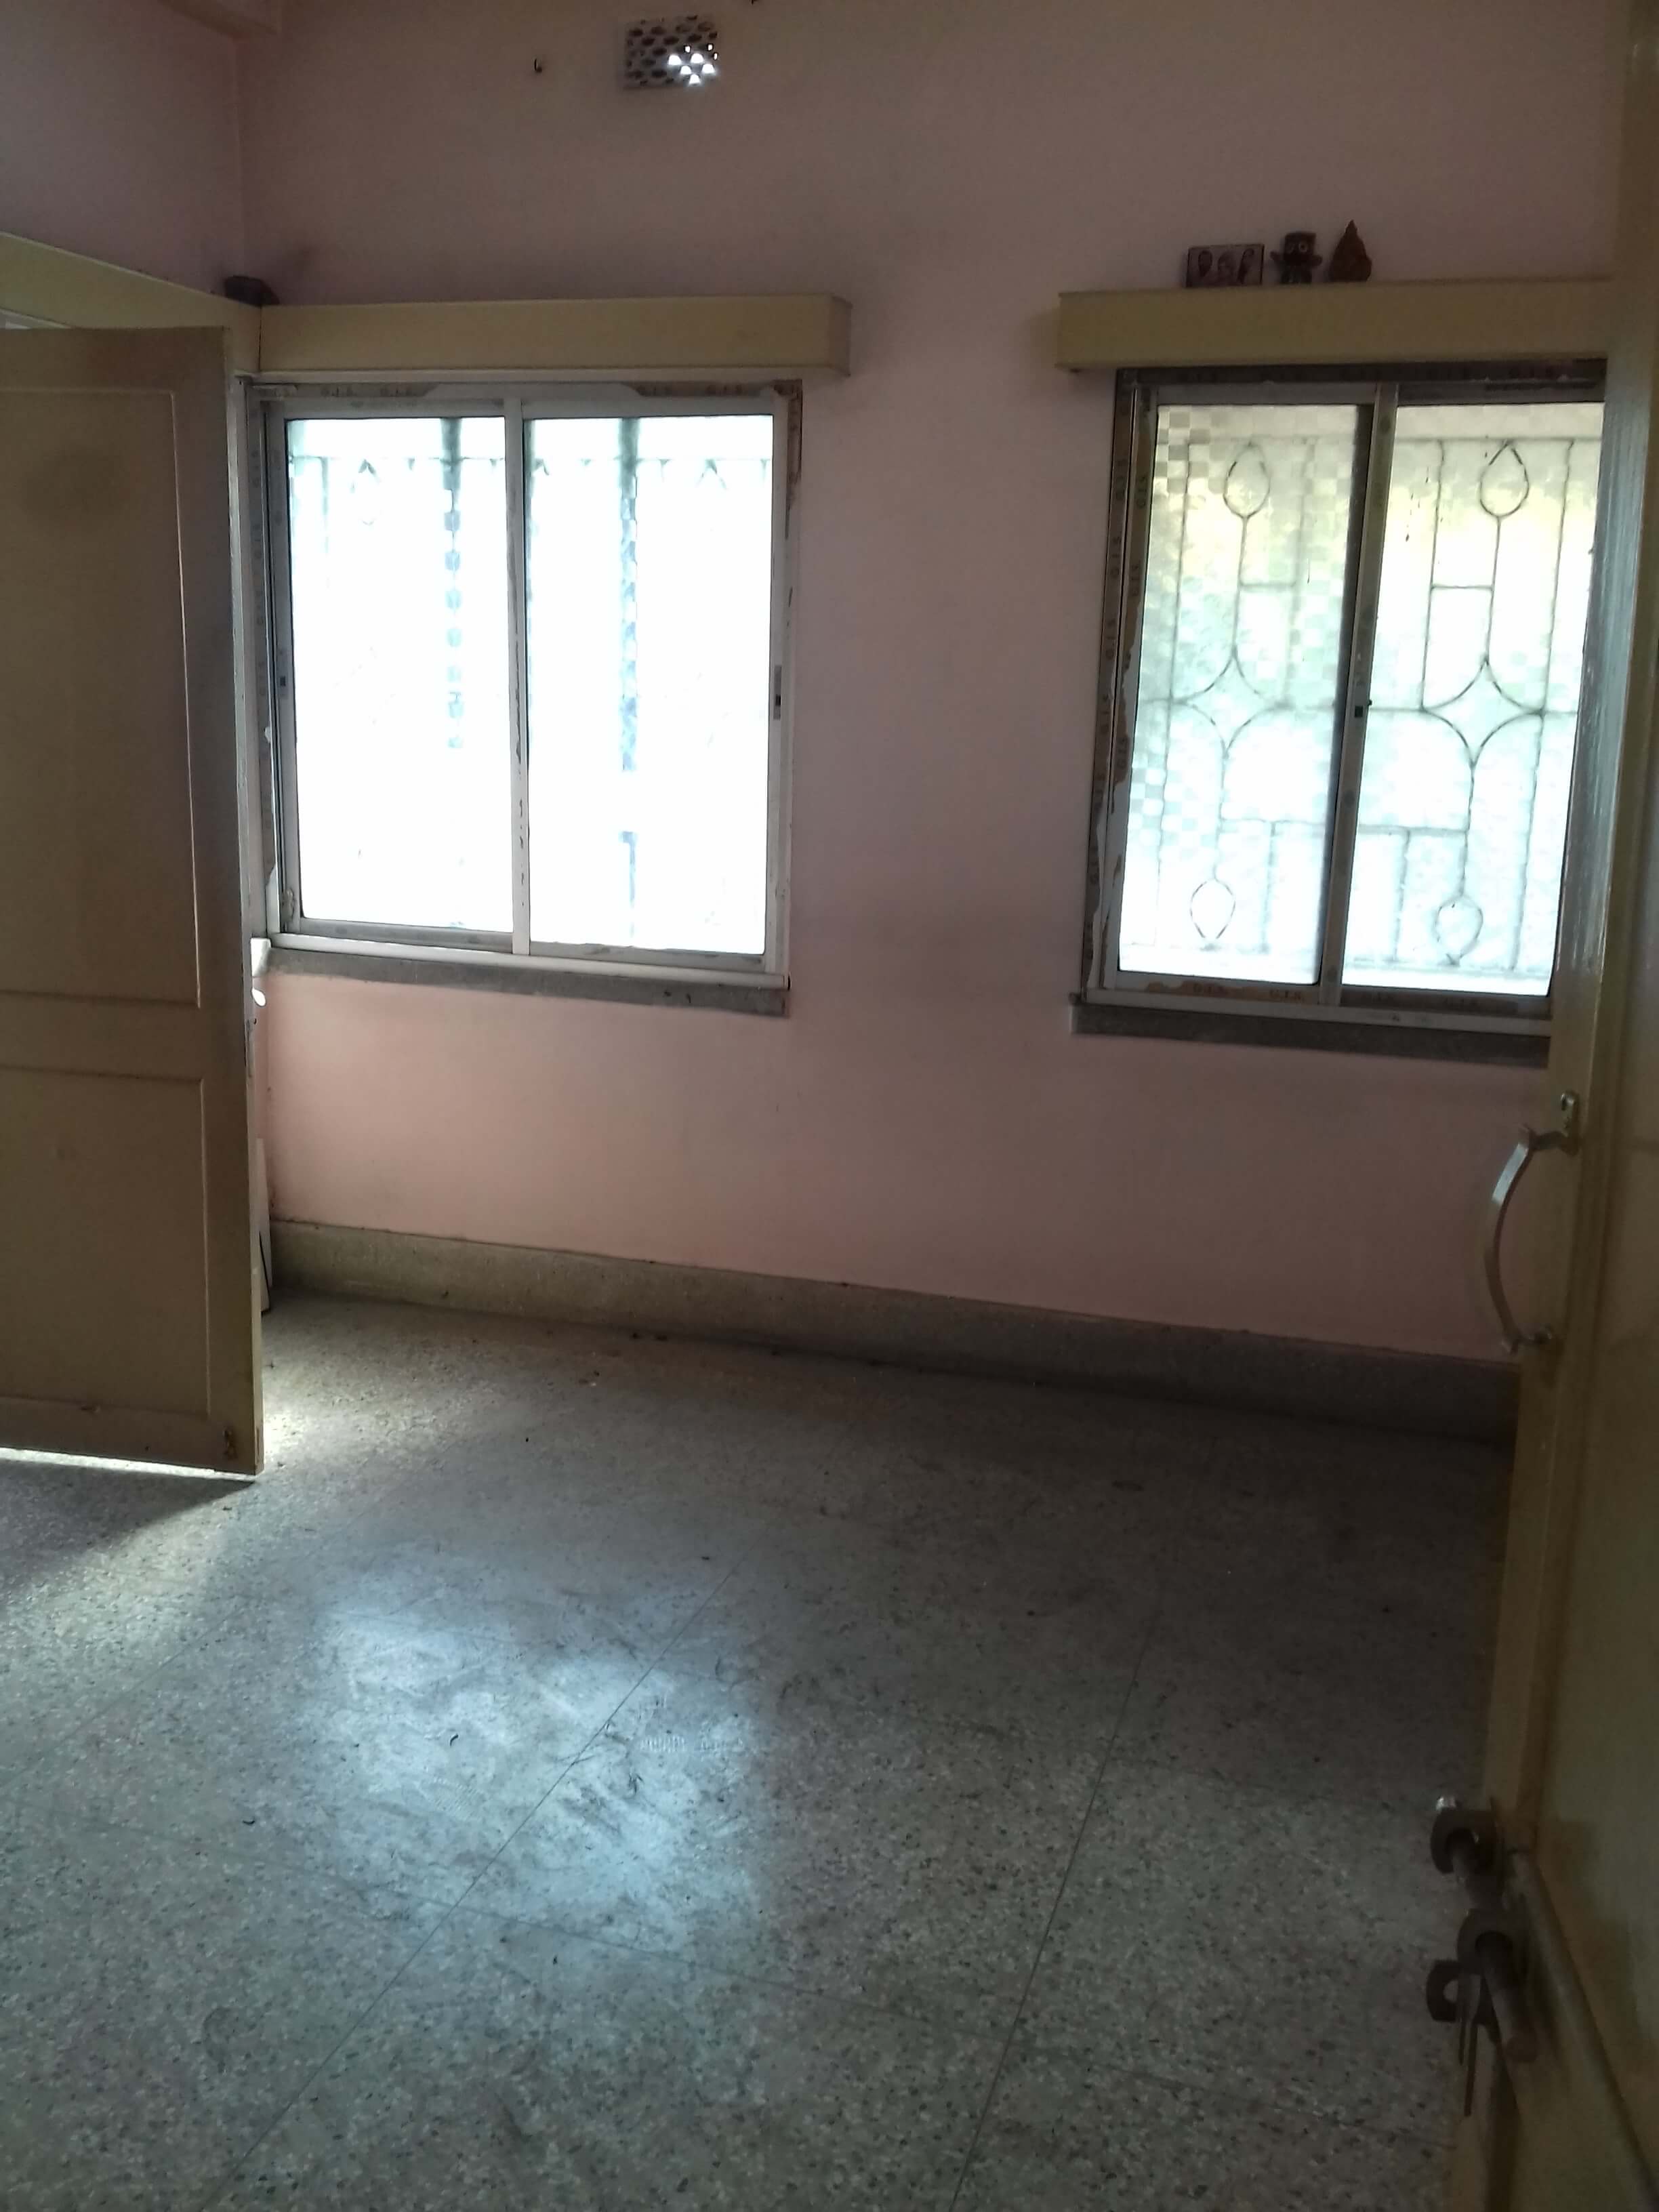 Flat For Rent in Baguihati Kolkata (Id: 10255)